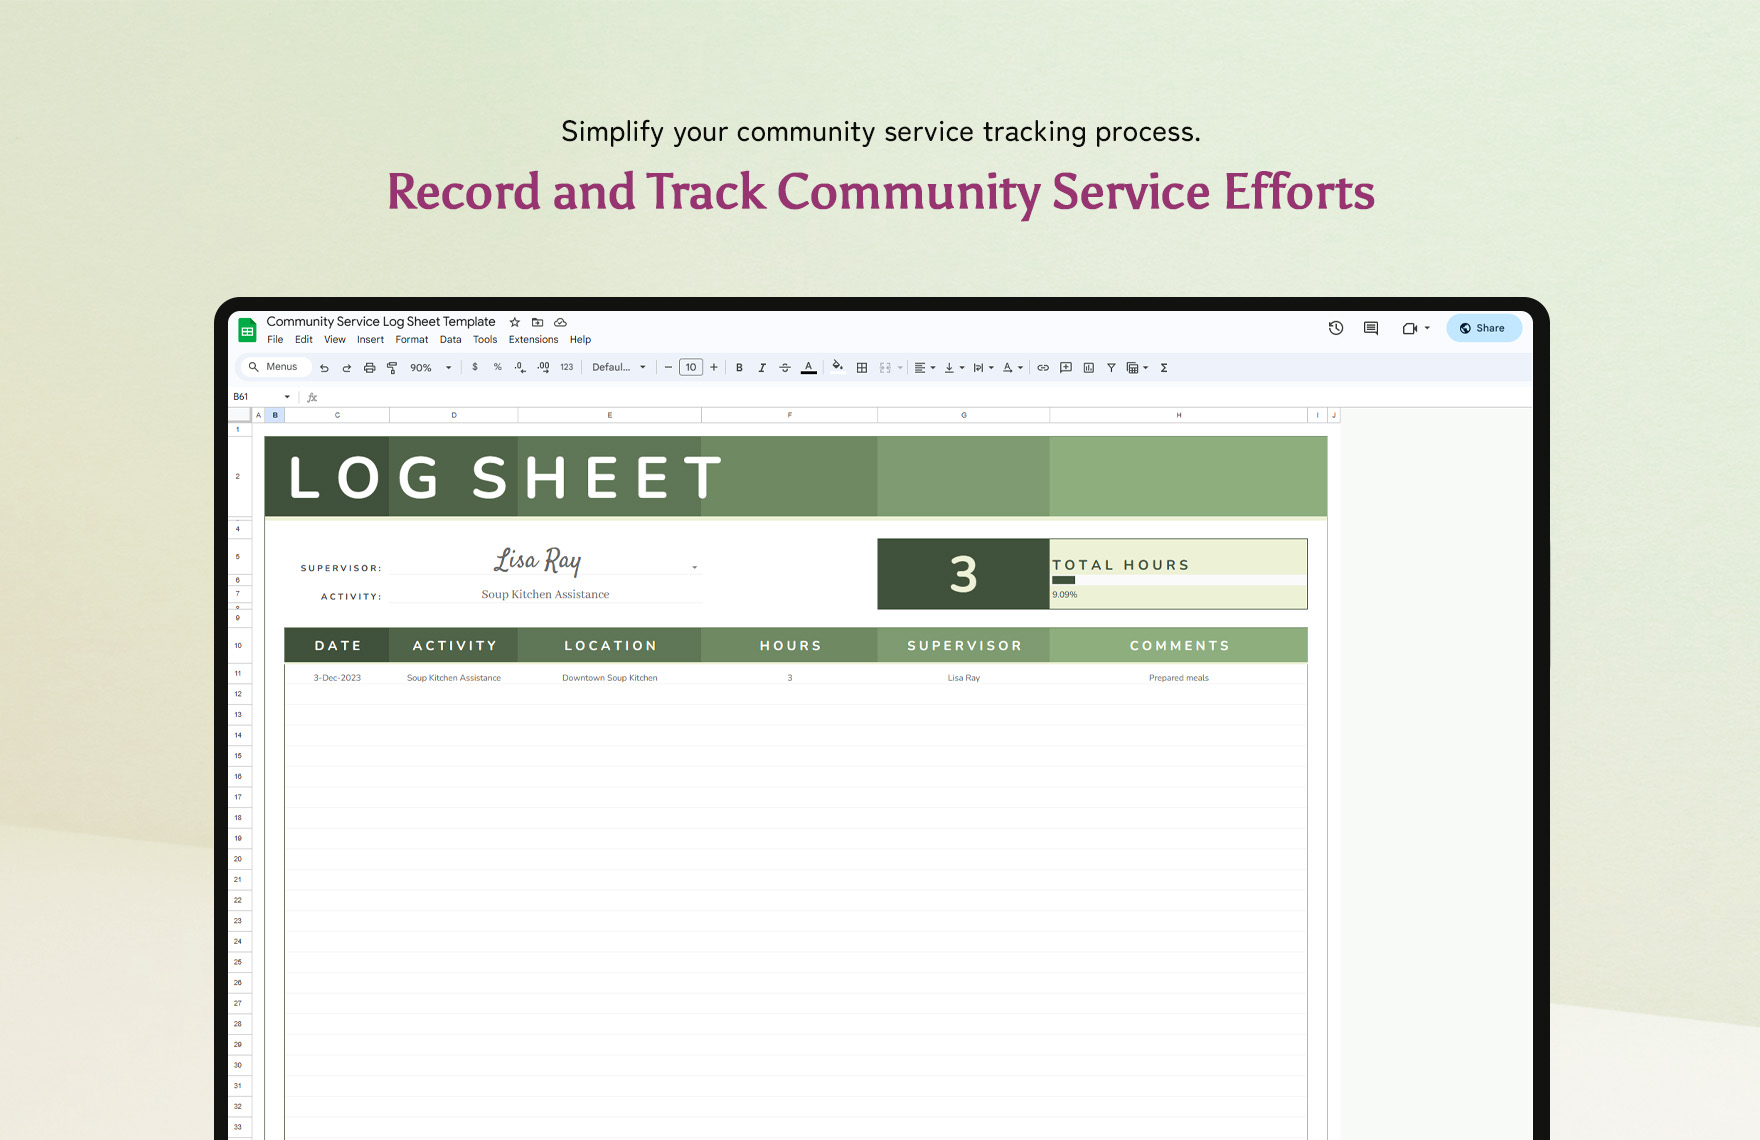 Community Service Log Sheet Template